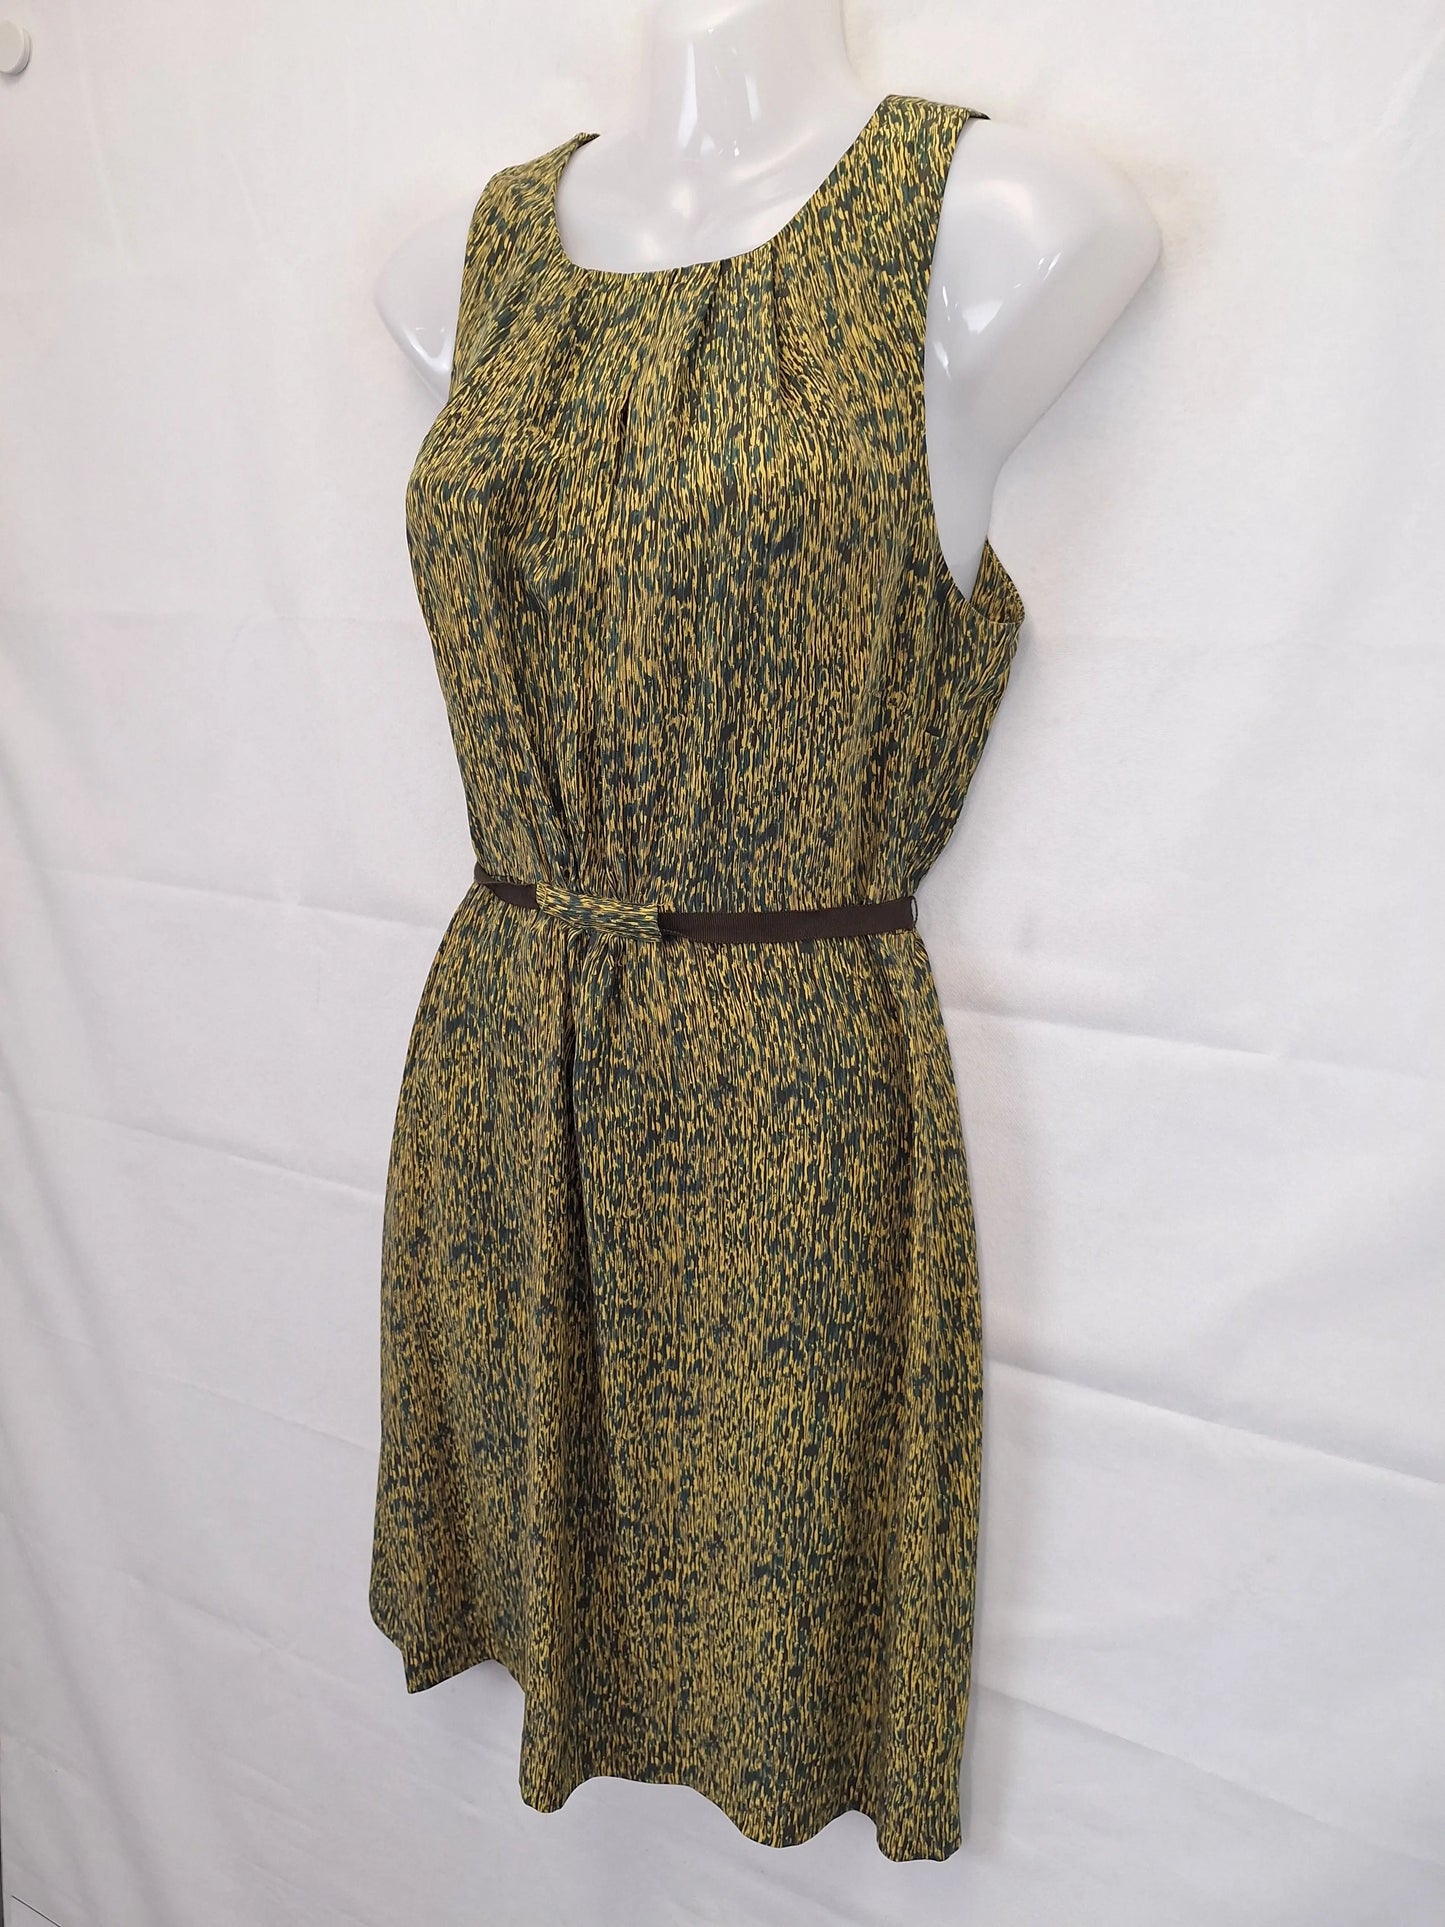 Marcs Tie Waist Midi Dress Size 8 by SwapUp-Online Second Hand Store-Online Thrift Store